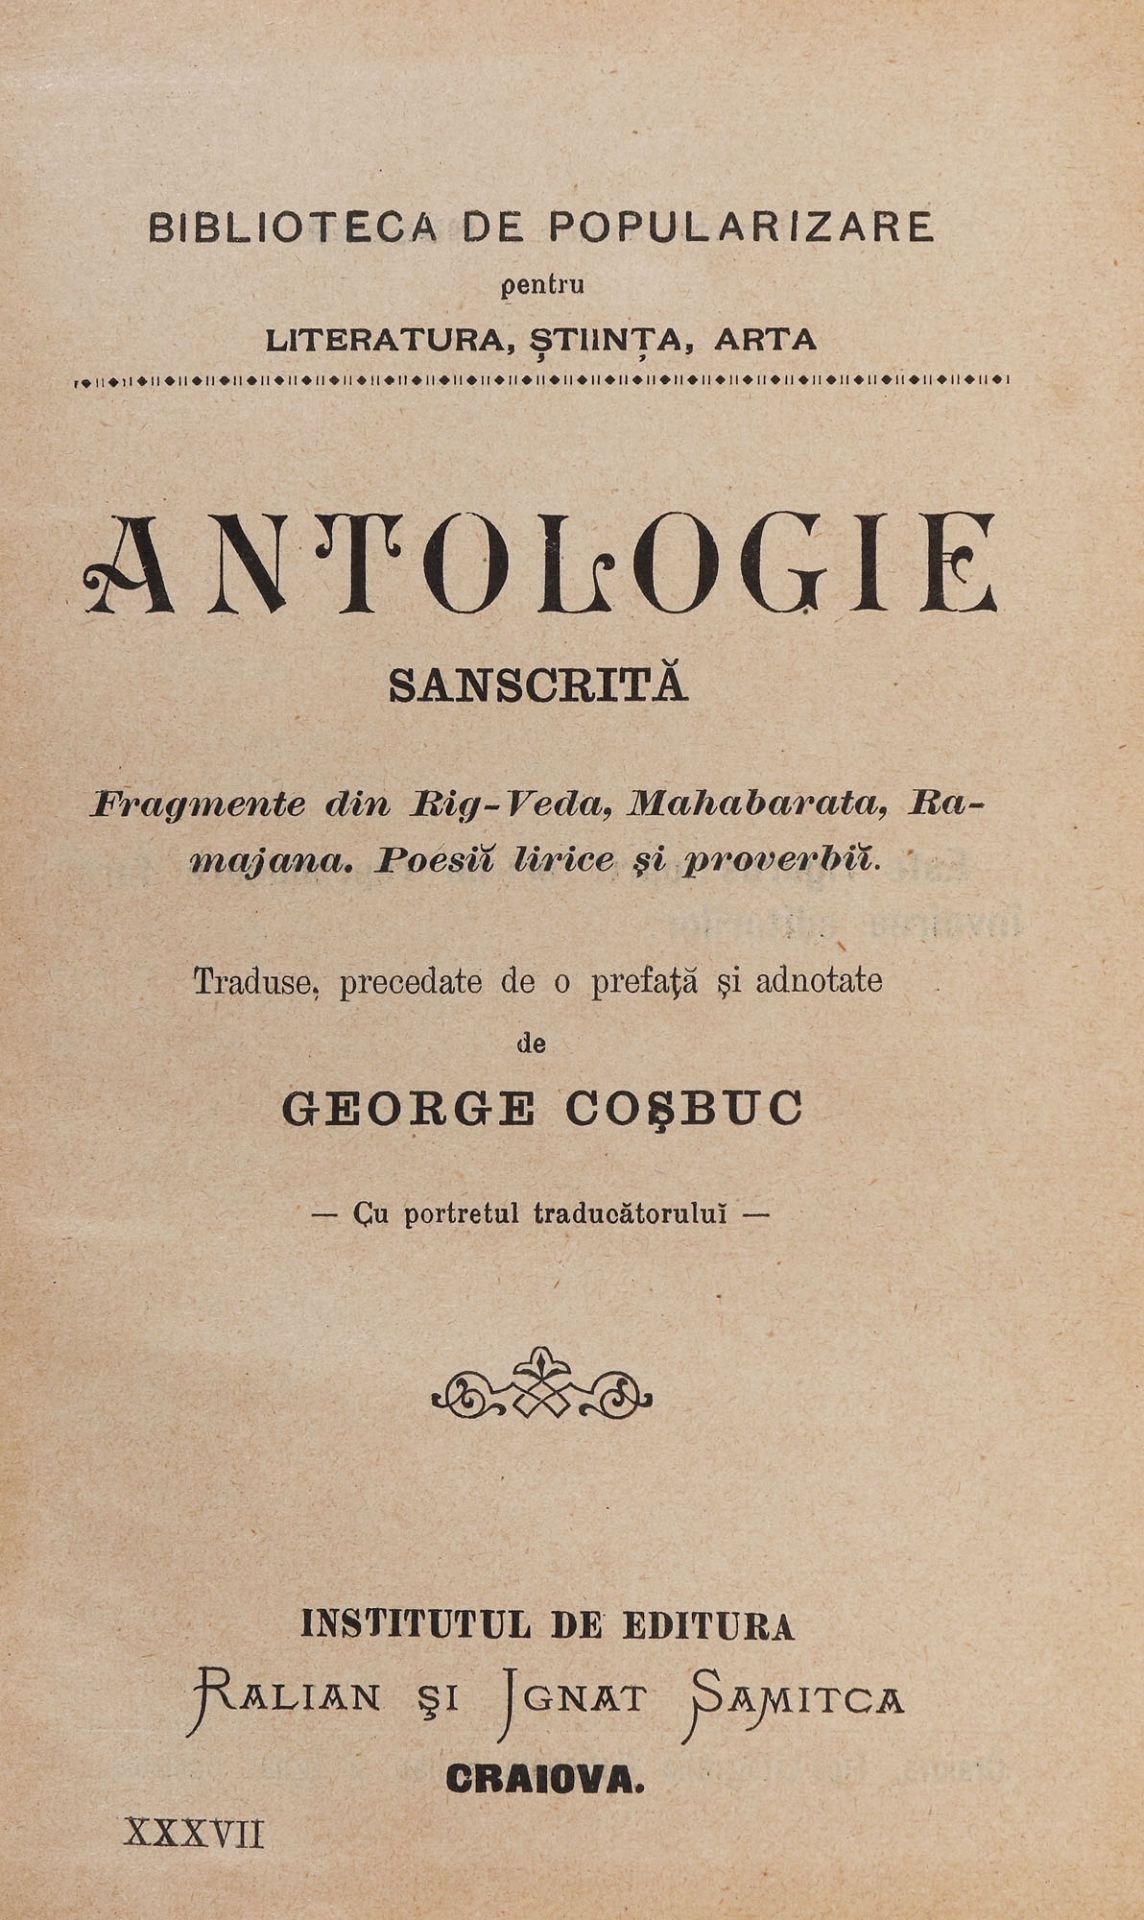 "Antologie sanscrit?", by George Co?buc, editio princeps, Craiova, [1897]